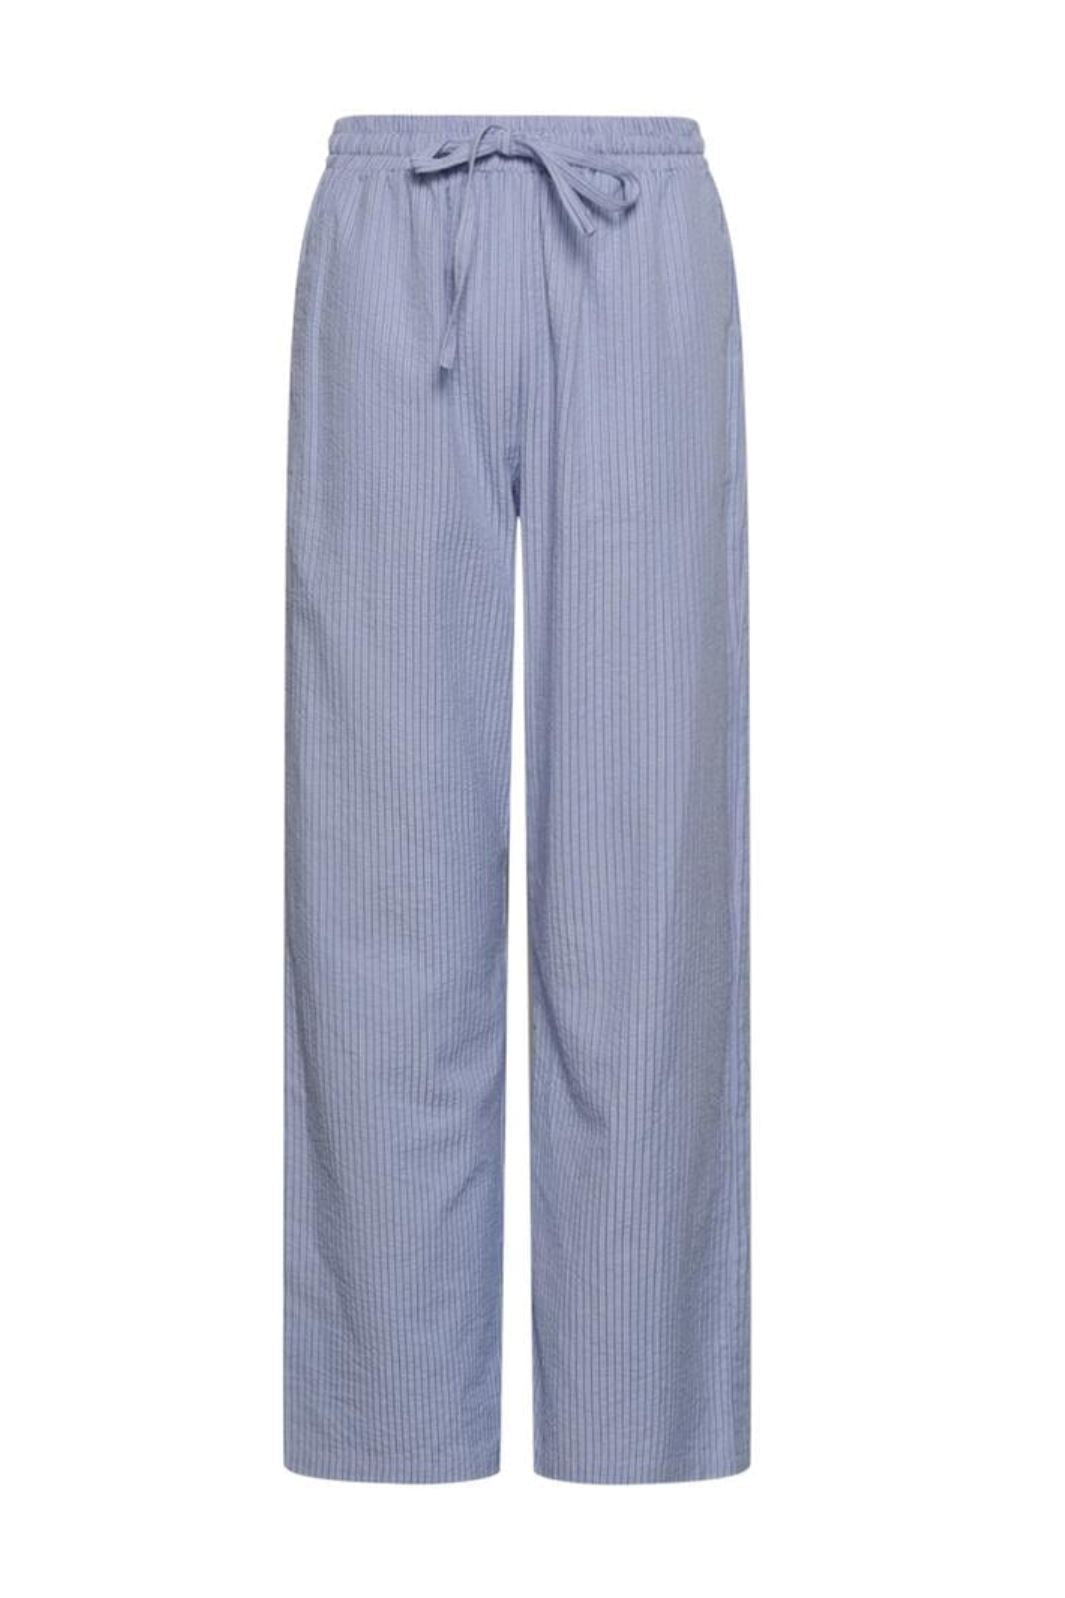 Noella - Rani Pants - Light Blue Stripe Bukser 